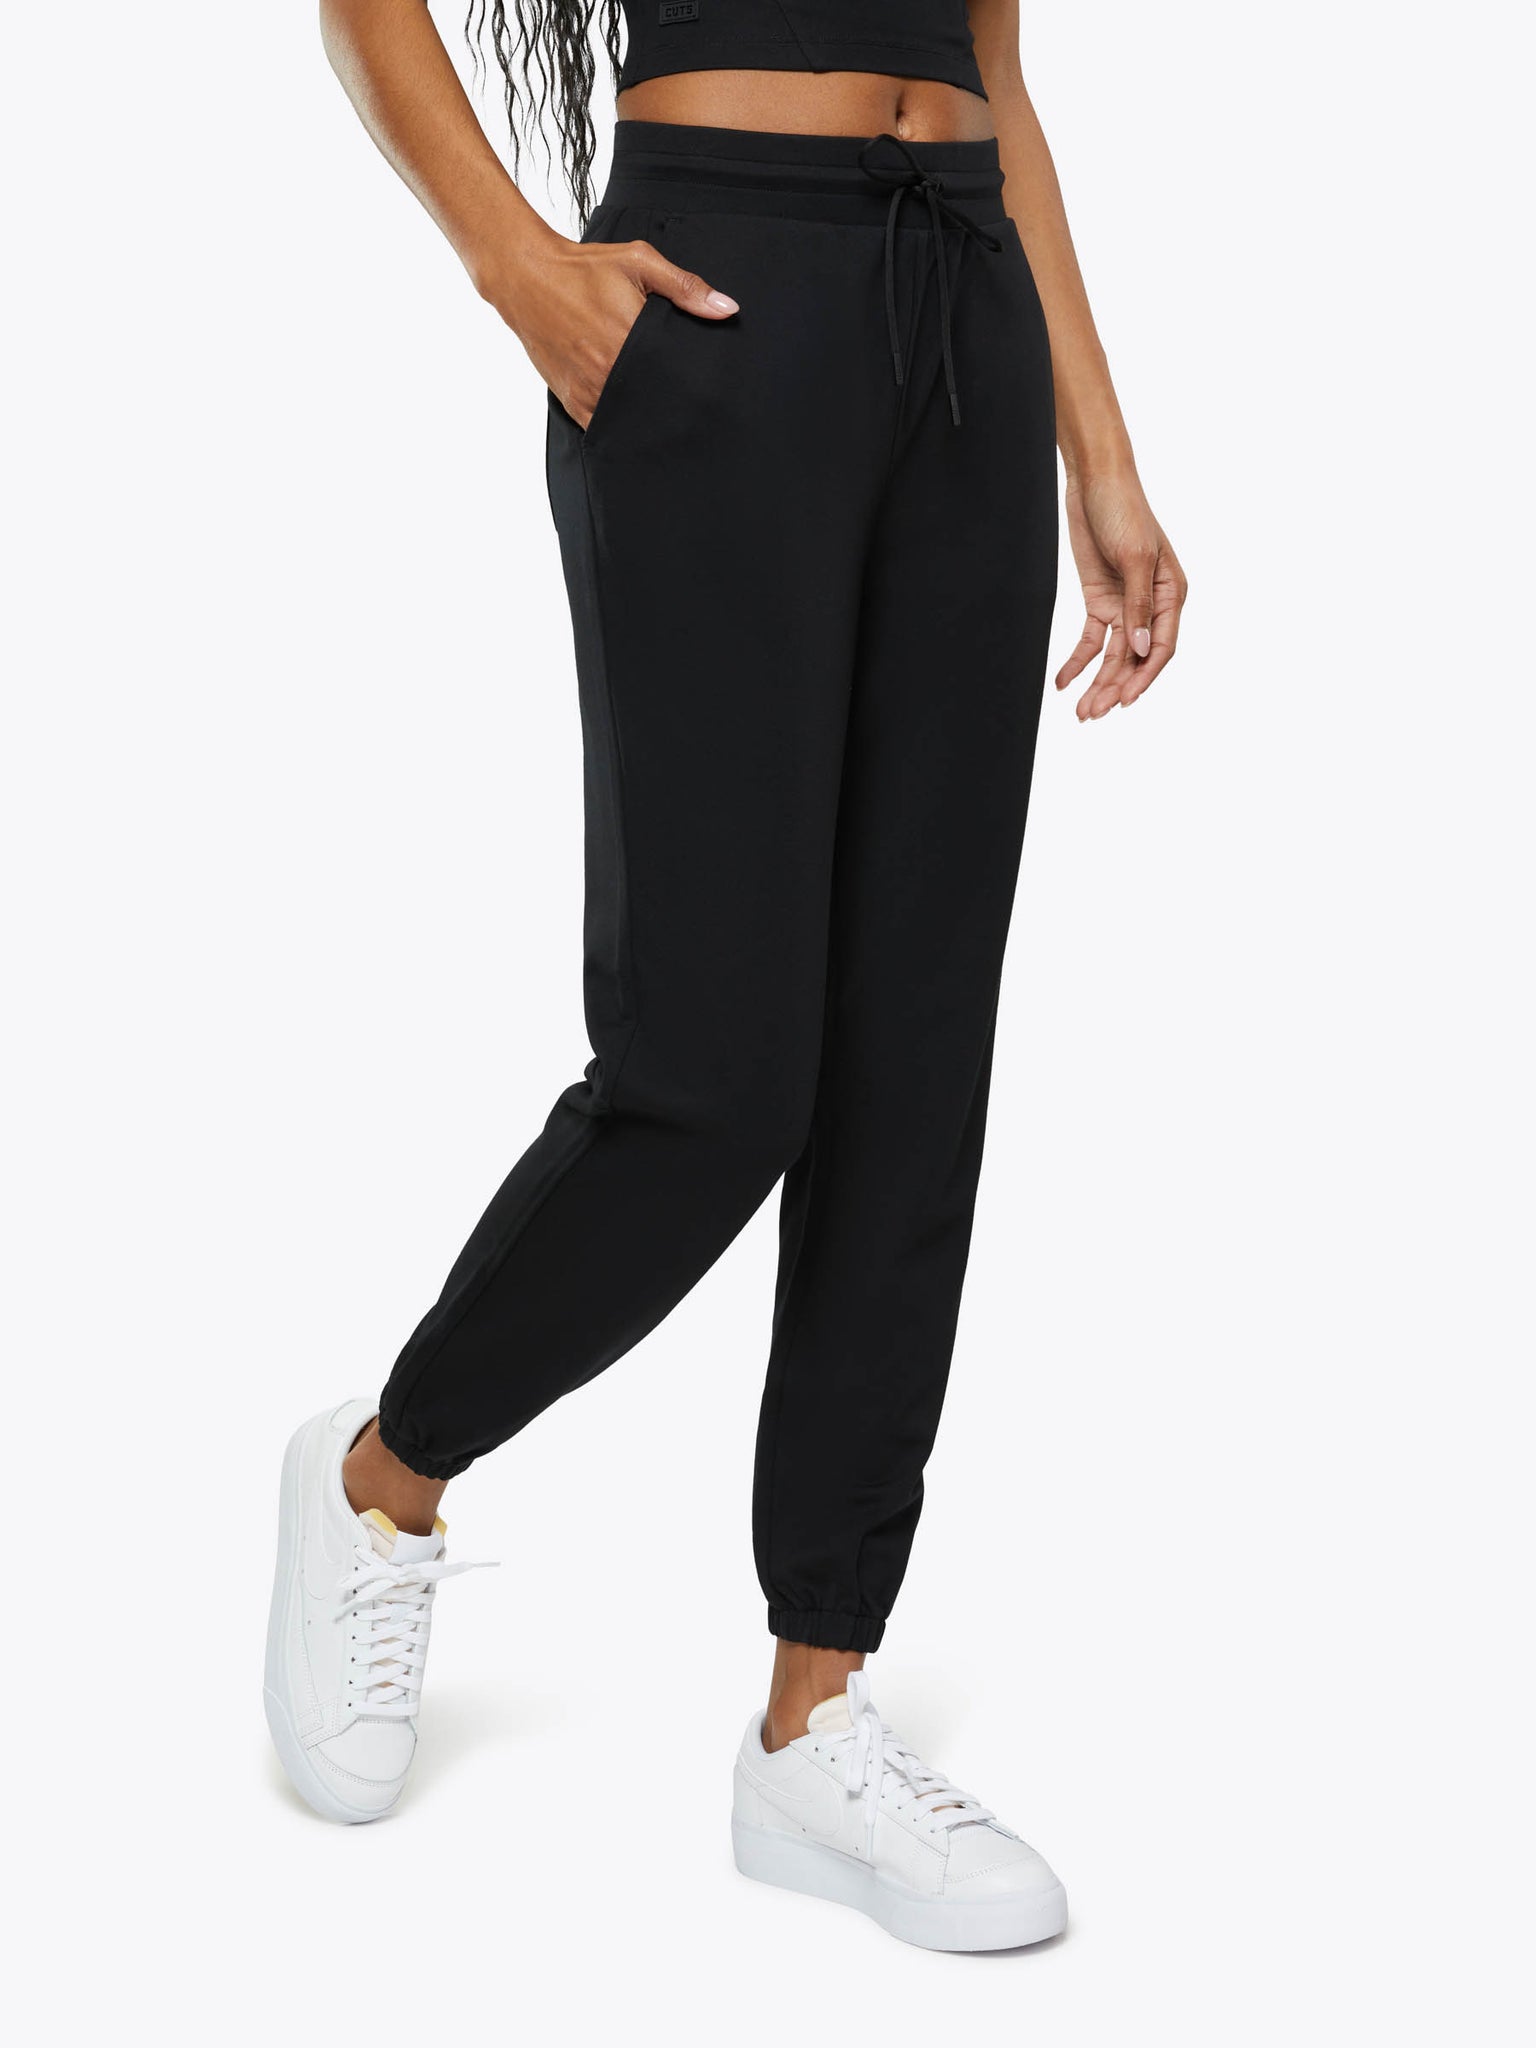 Gymshark Womens Black Drawstring Waist Tapered Leg Zip Pocket Joggers Pants  Sz L